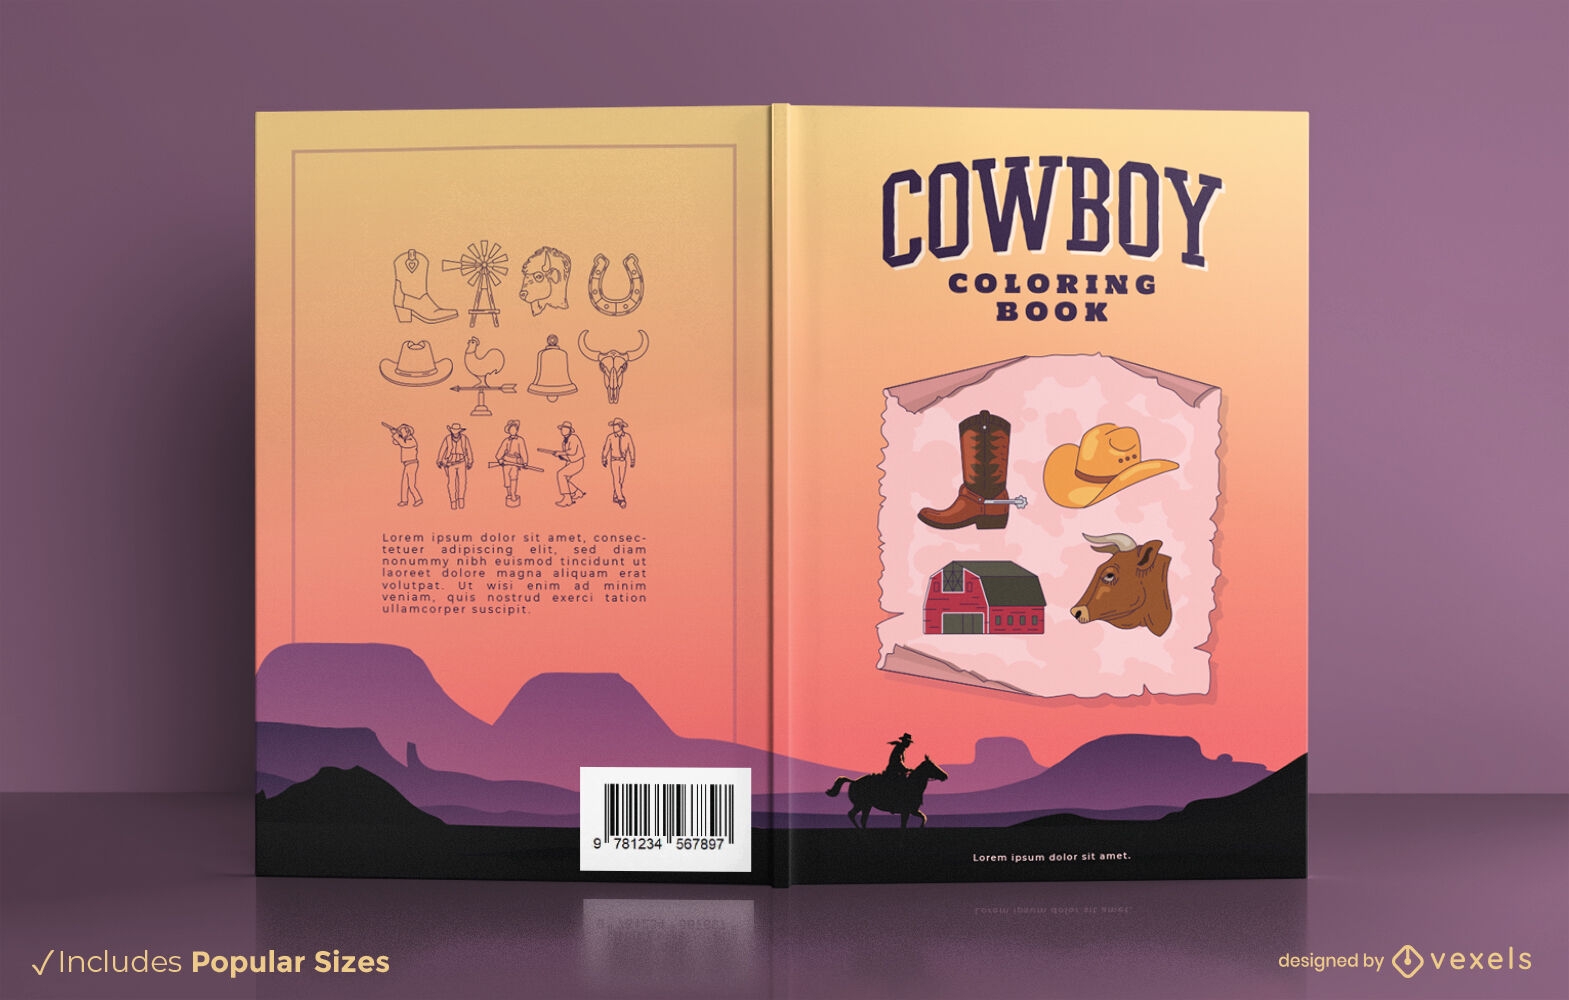 Cowboy coloring book cover design